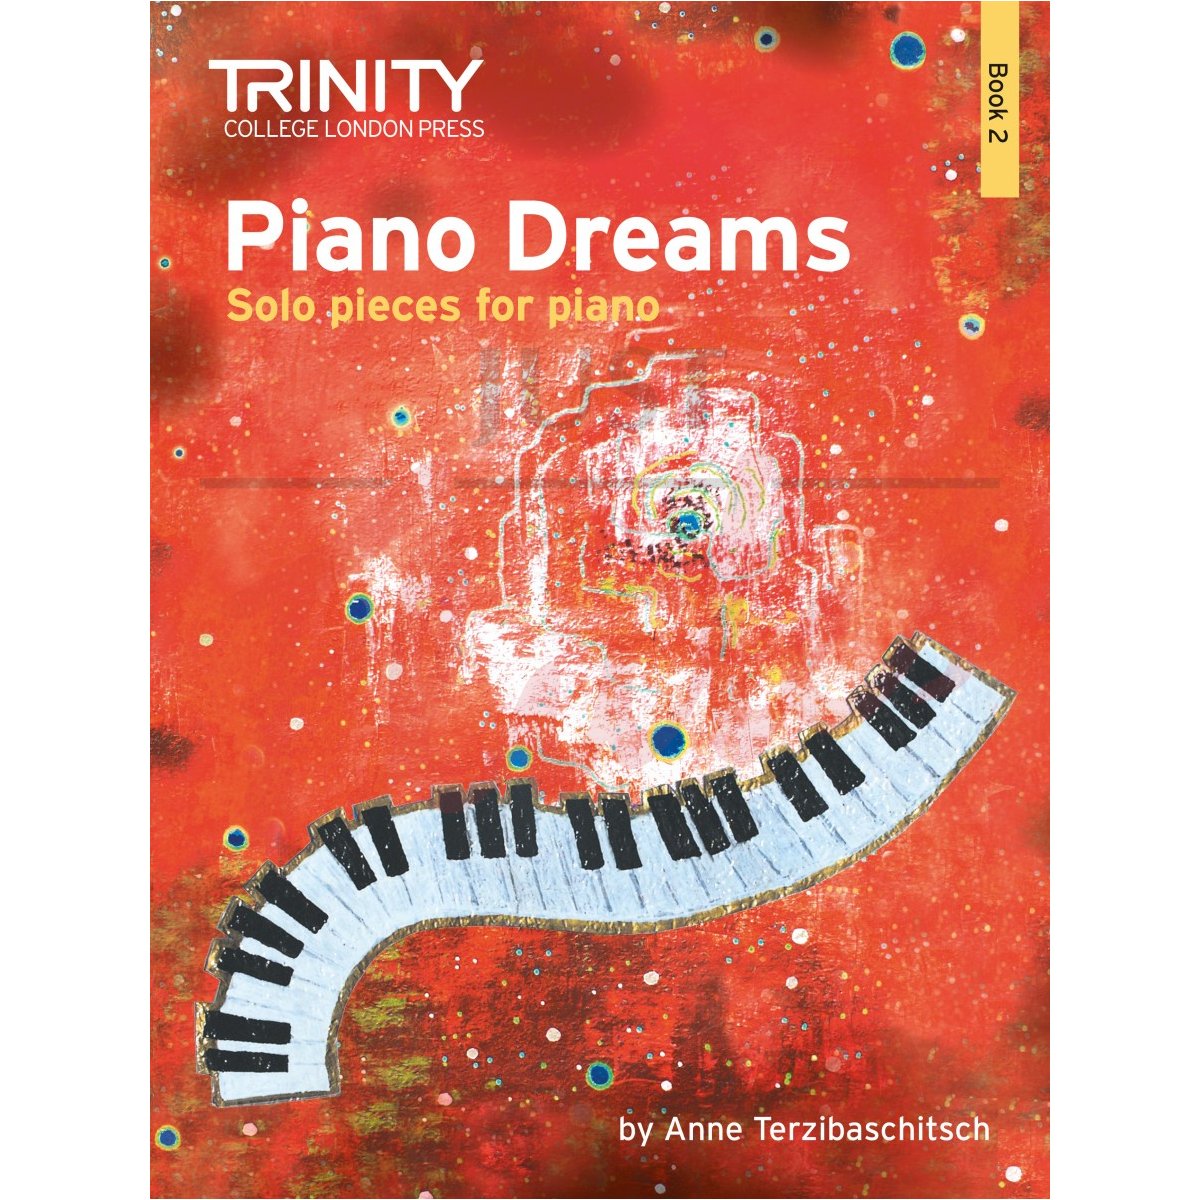 Piano Dreams - Solo Pieces for Piano Book 2